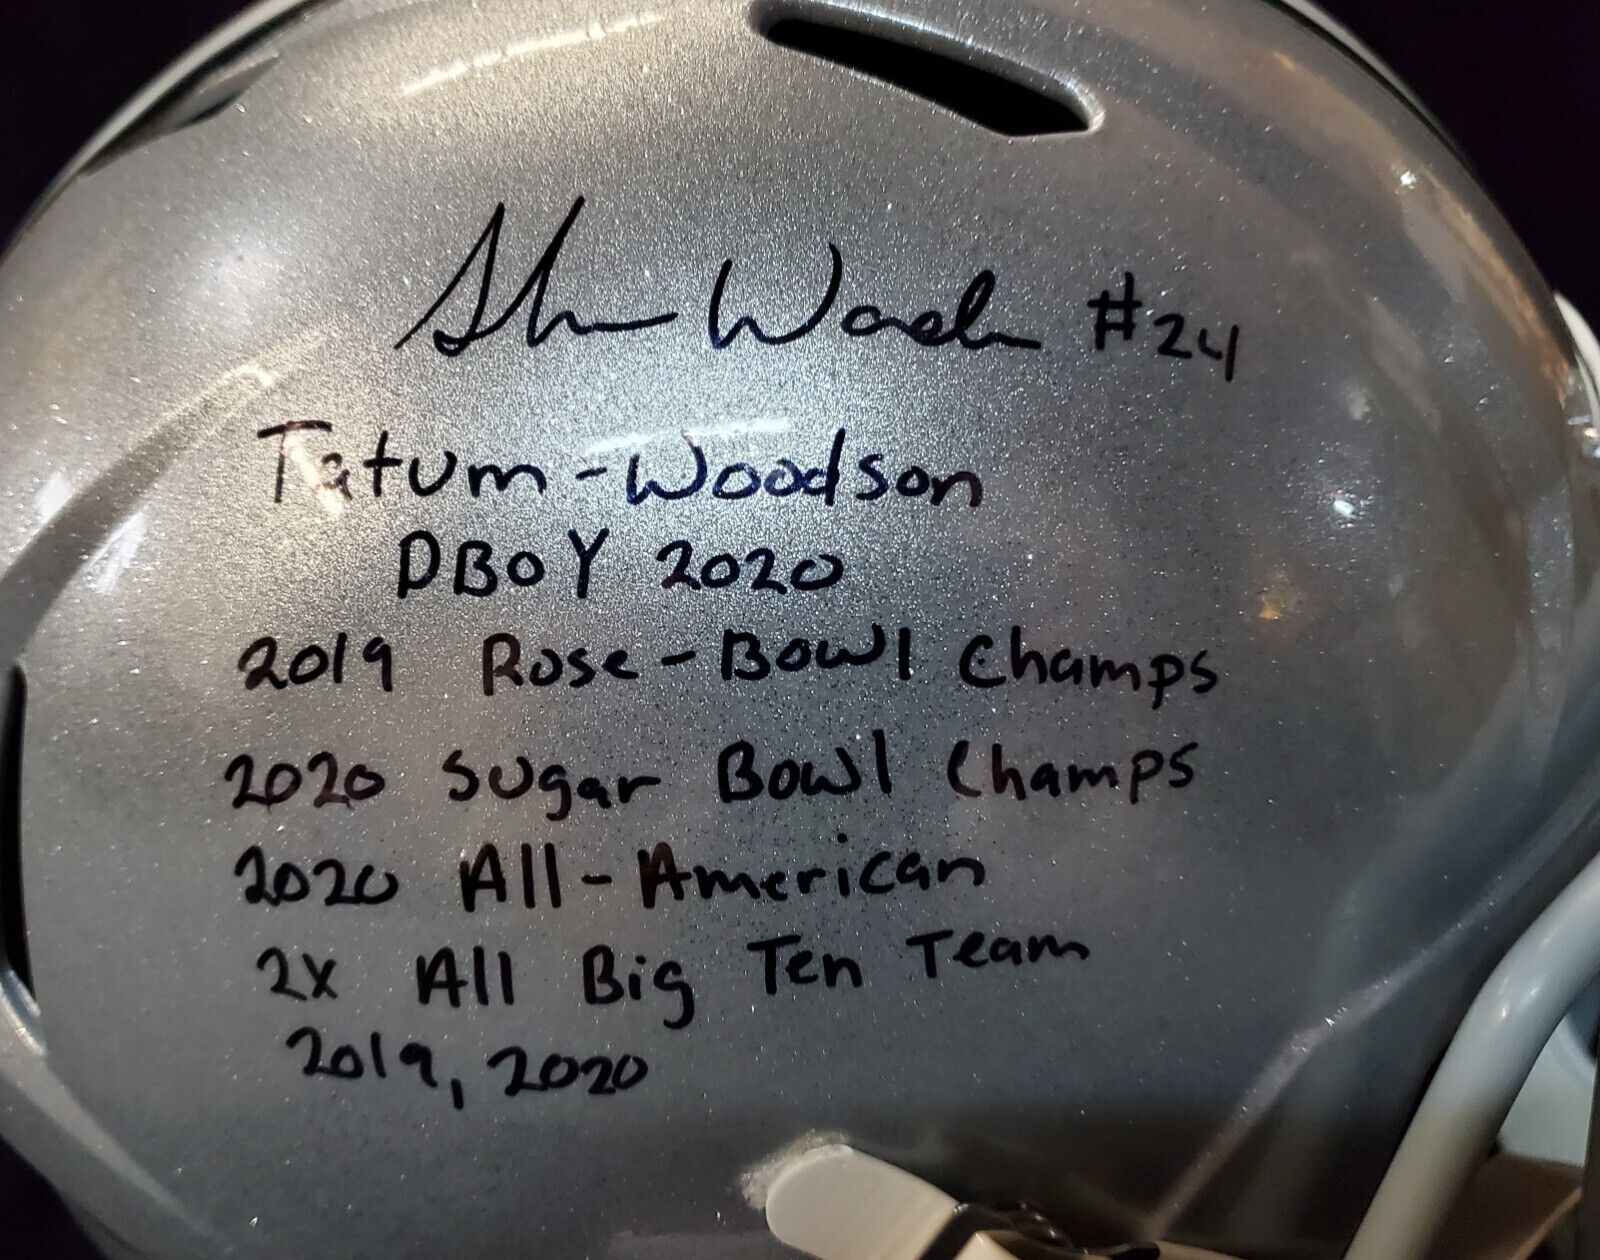 MVP Authentics Shaun Wade Autographed Signed Ohio State Buckeyes Full Size Helmet Jsa Debut Coa 314.10 sports jersey framing , jersey framing